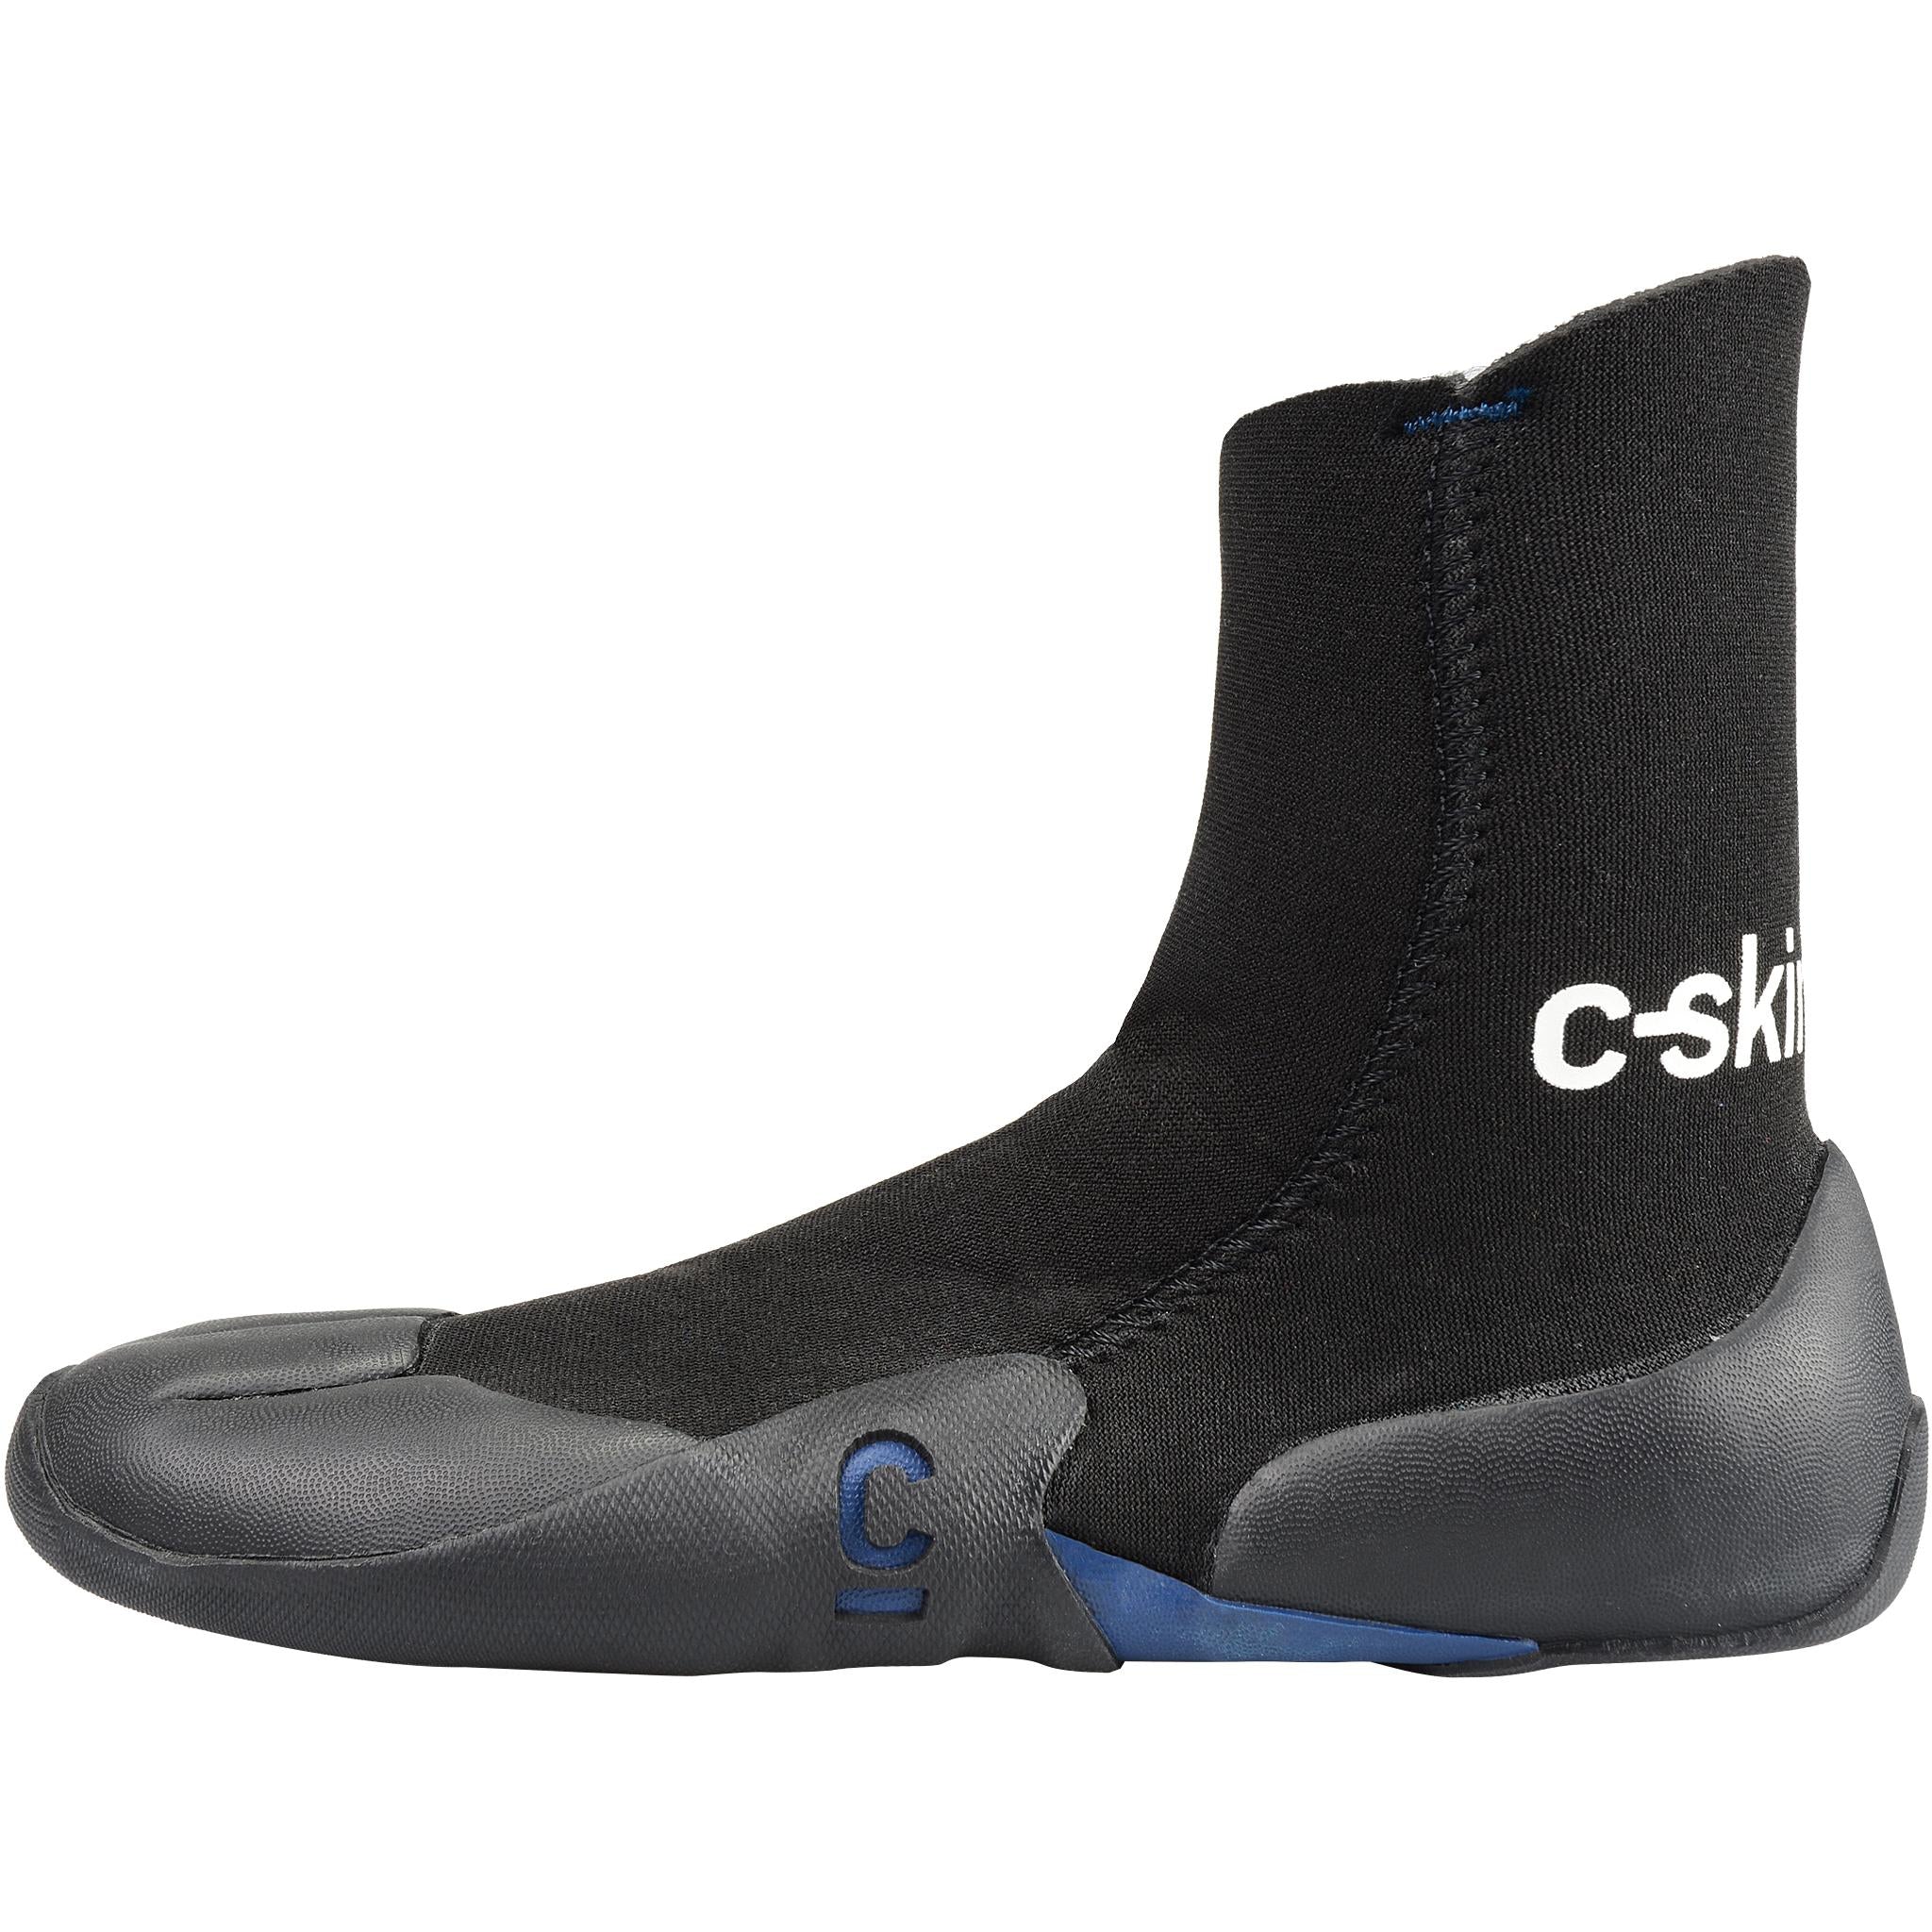 c skins boots